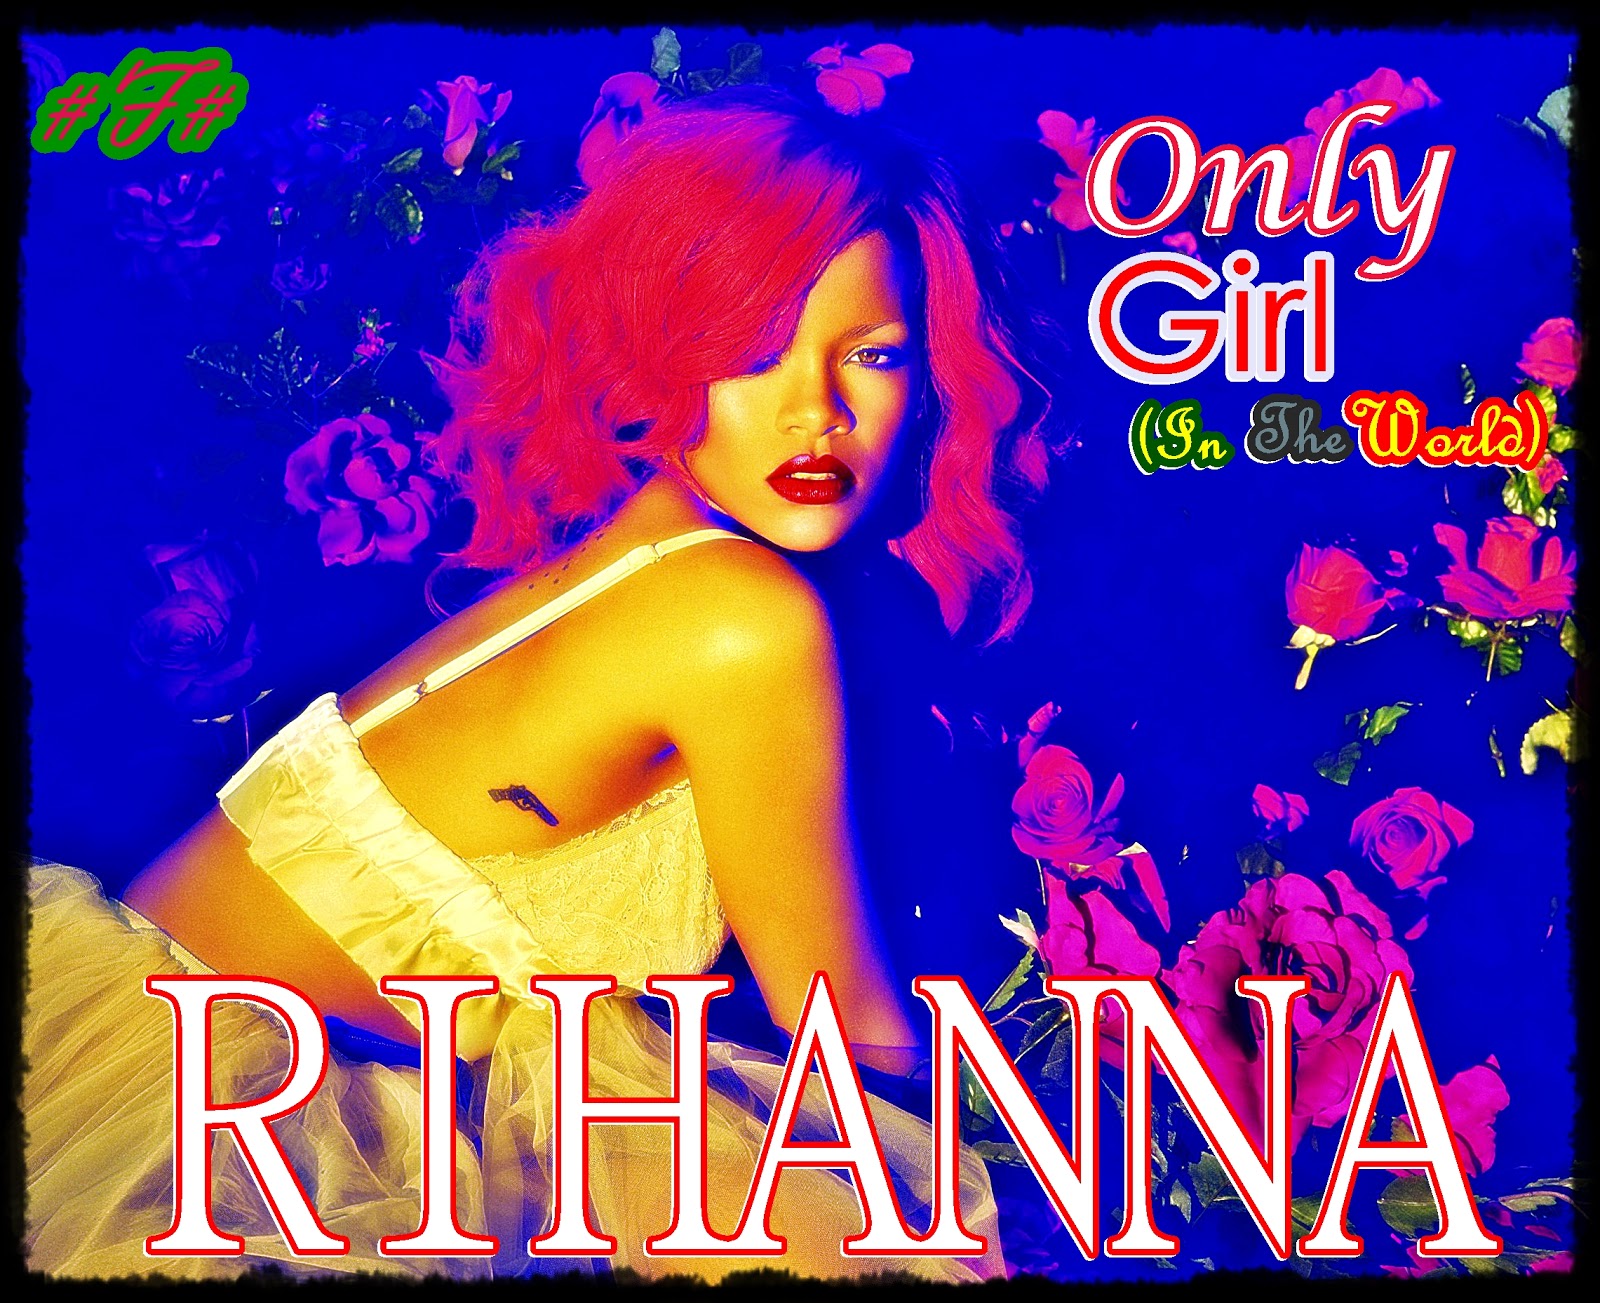 http://3.bp.blogspot.com/_GTQEn3ssFMo/TLktr5uO1MI/AAAAAAAAACA/4HGEio-k9aY/s1600/Rihanna.jpg